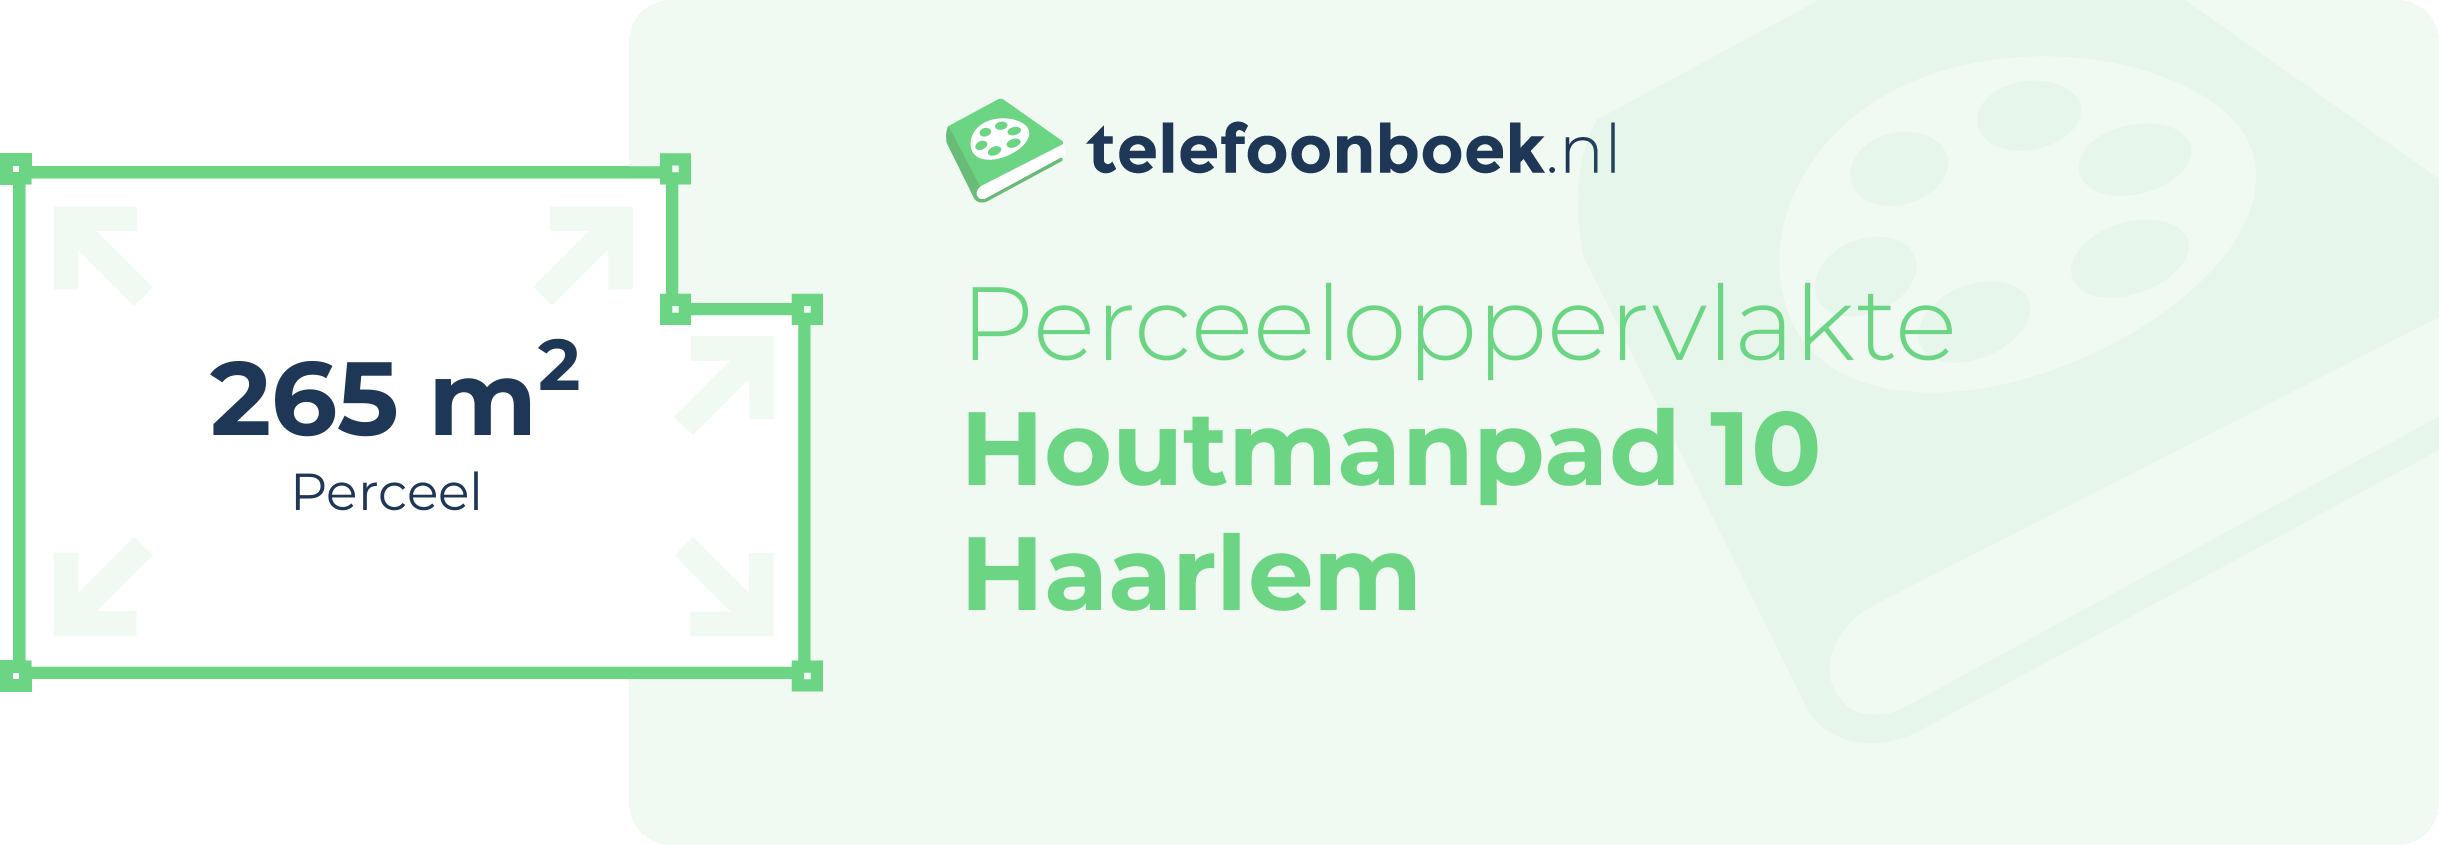 Perceeloppervlakte Houtmanpad 10 Haarlem